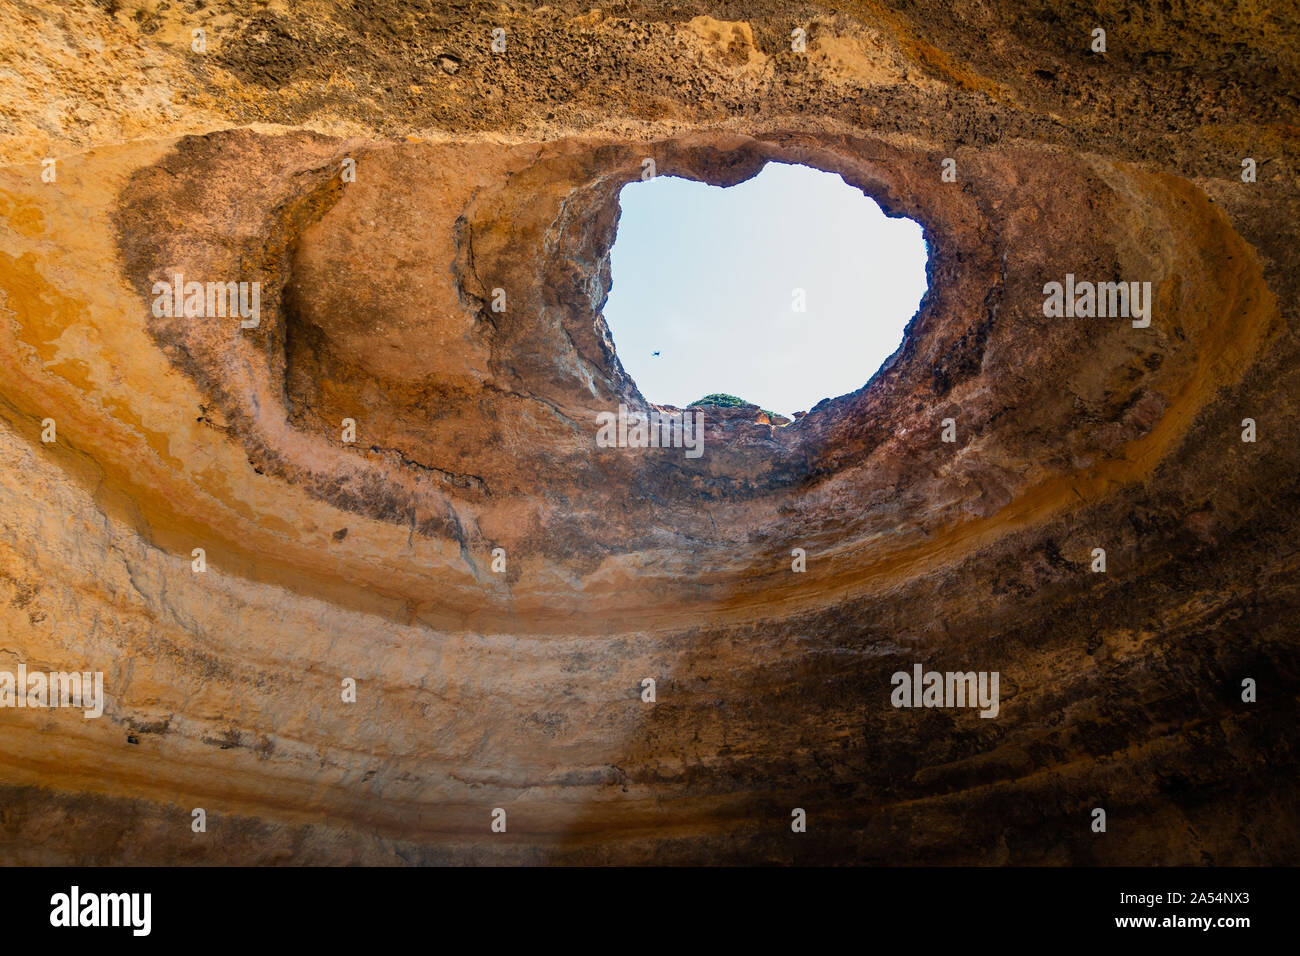 The “eye” of the Algar de Benagil, the most famous sea cave on Algarve coastline, Portugal Stock Photo